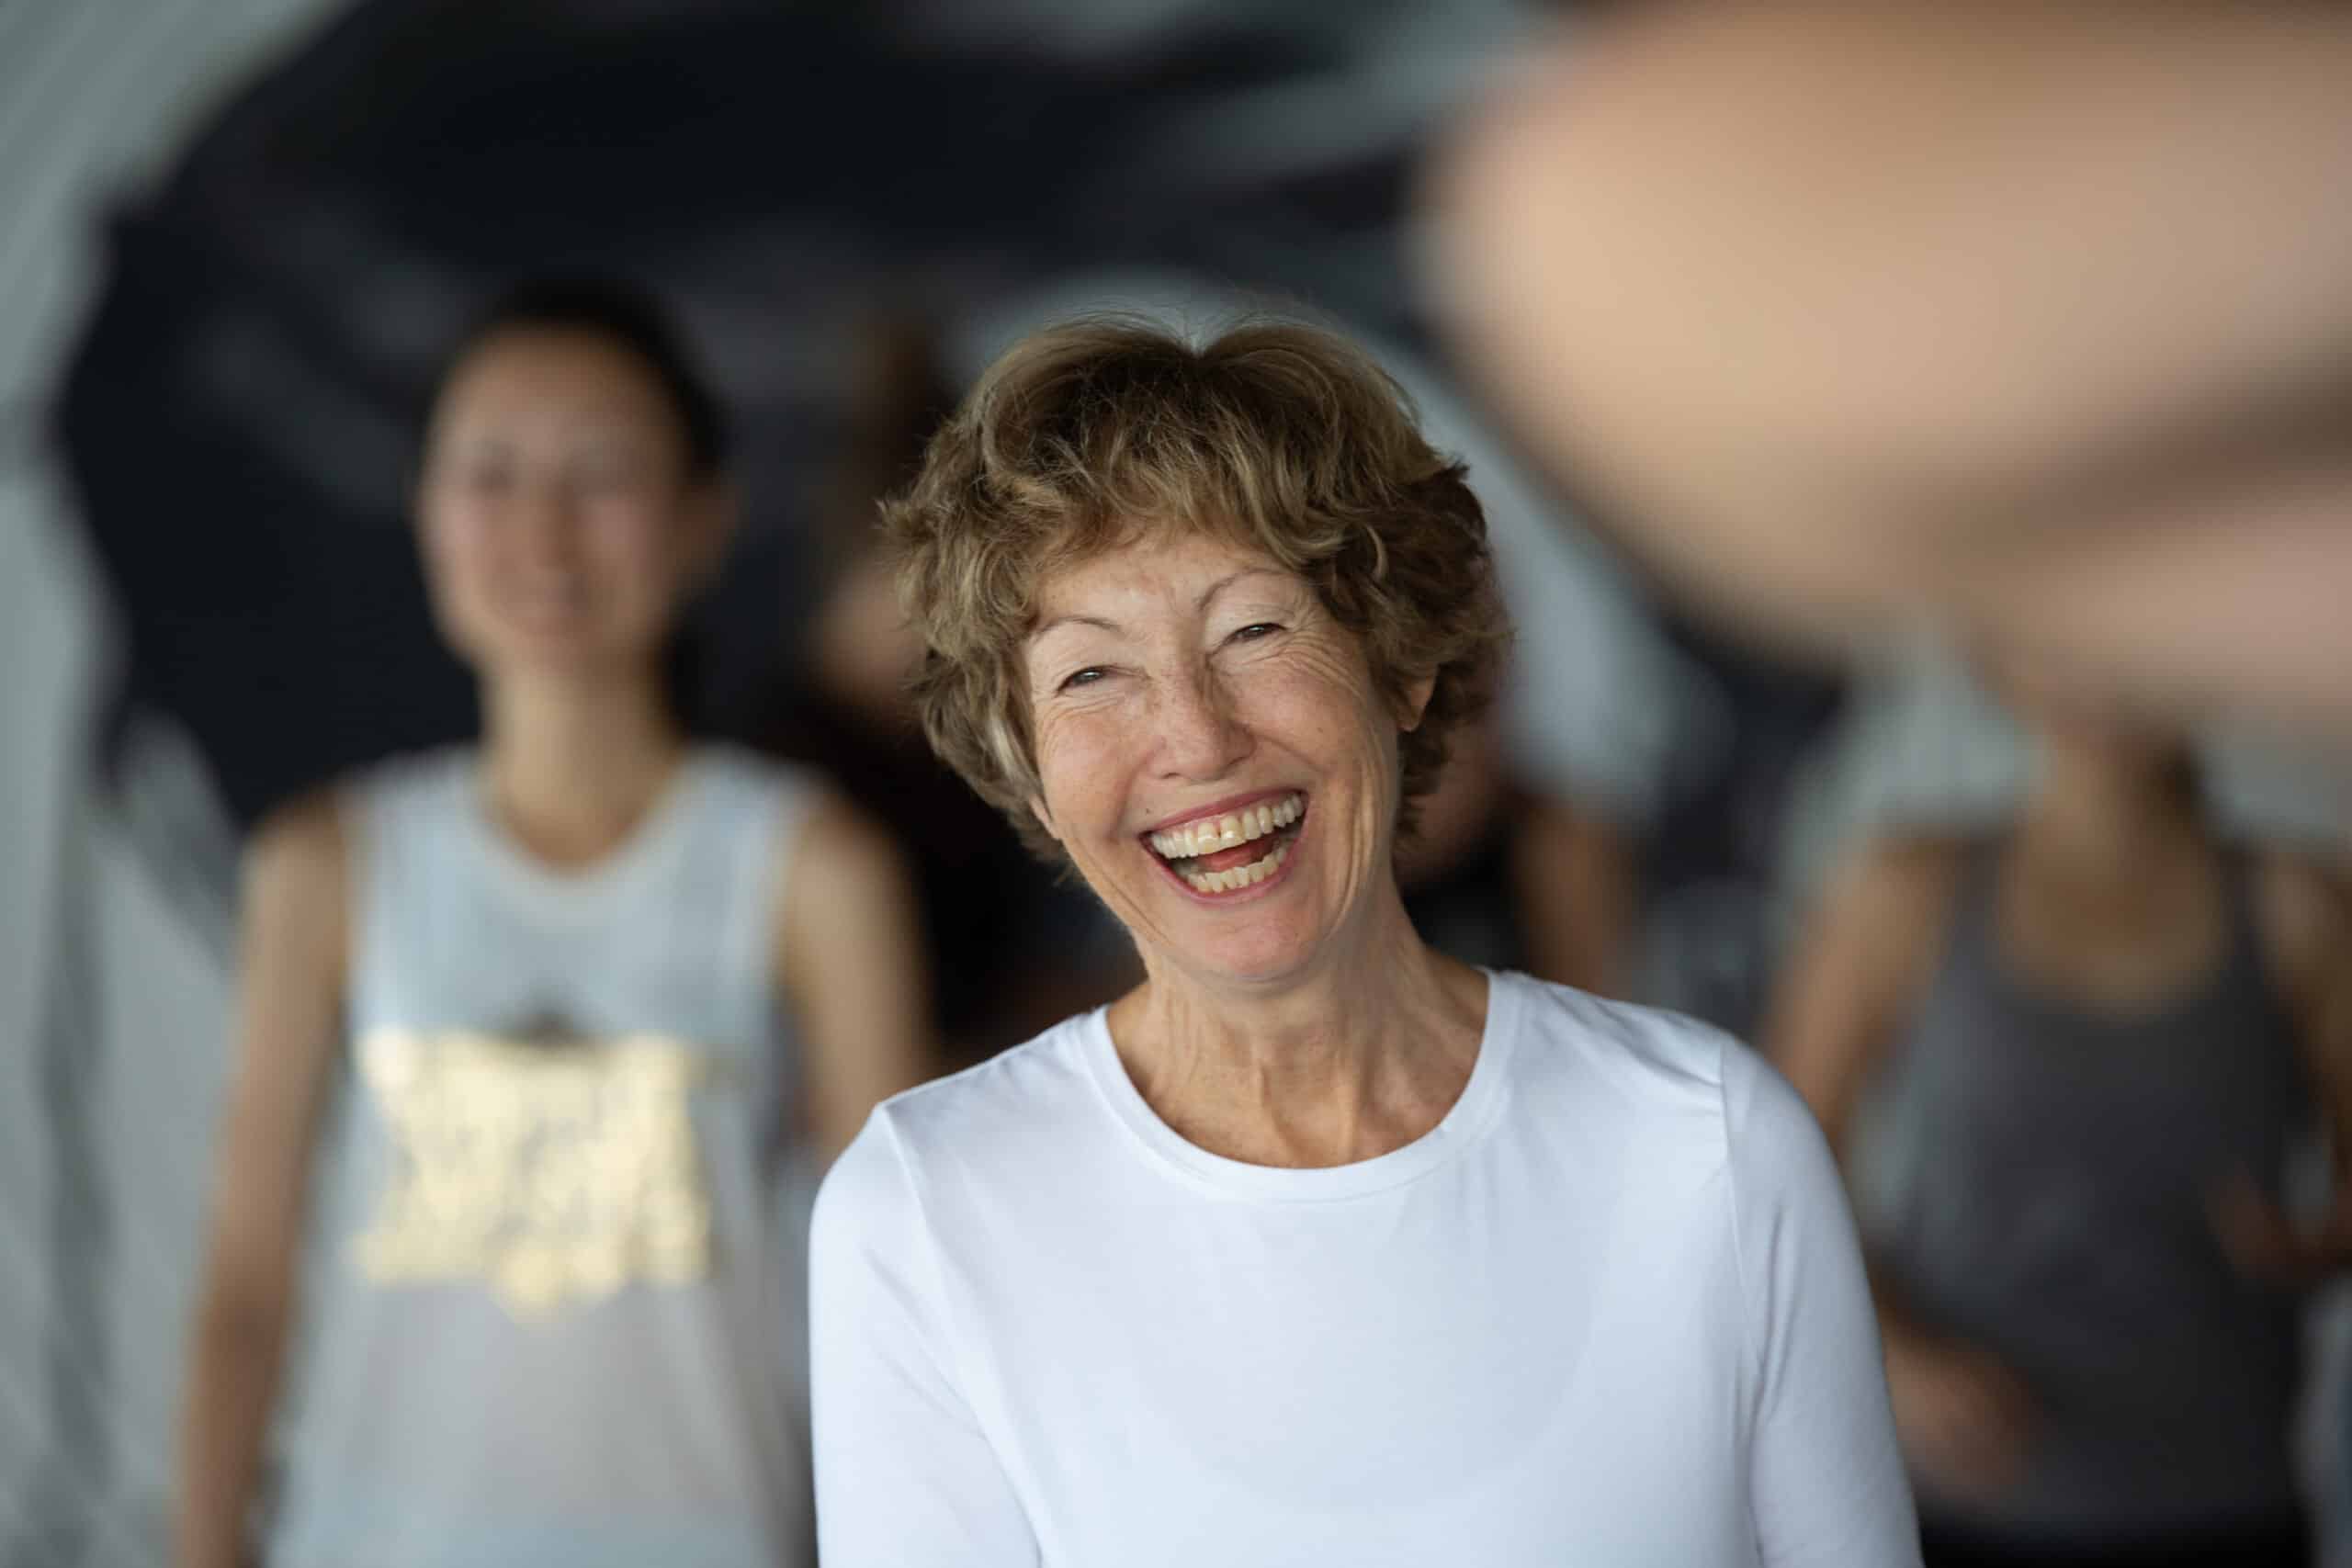 Qigong for Seniors - A senior woman smiling during qigong class 